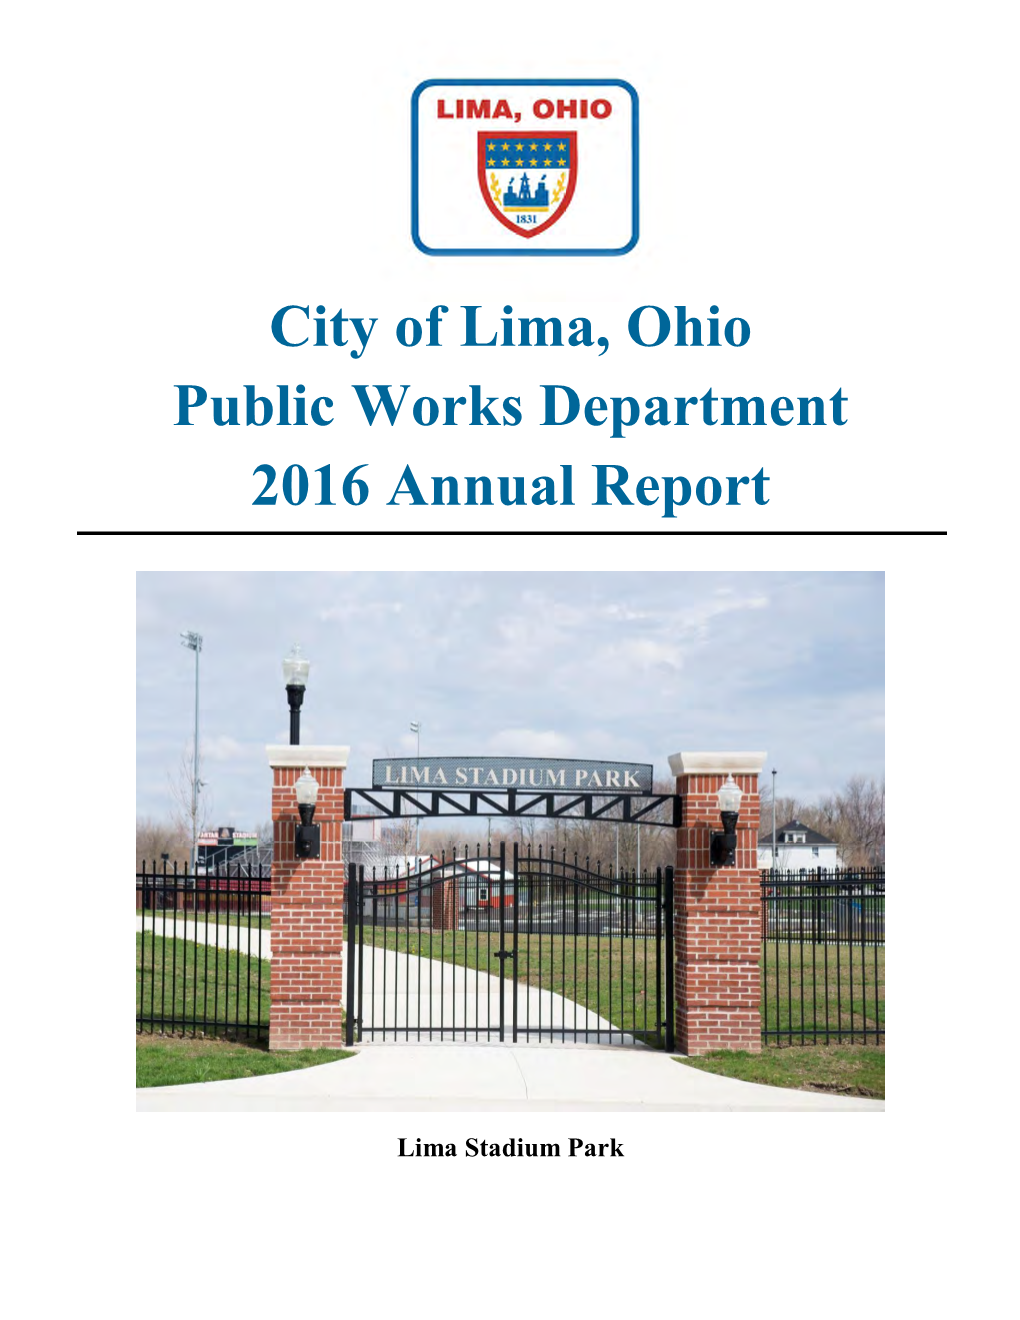 City of Lima, Ohio Public Works Department 2016 Annual Report